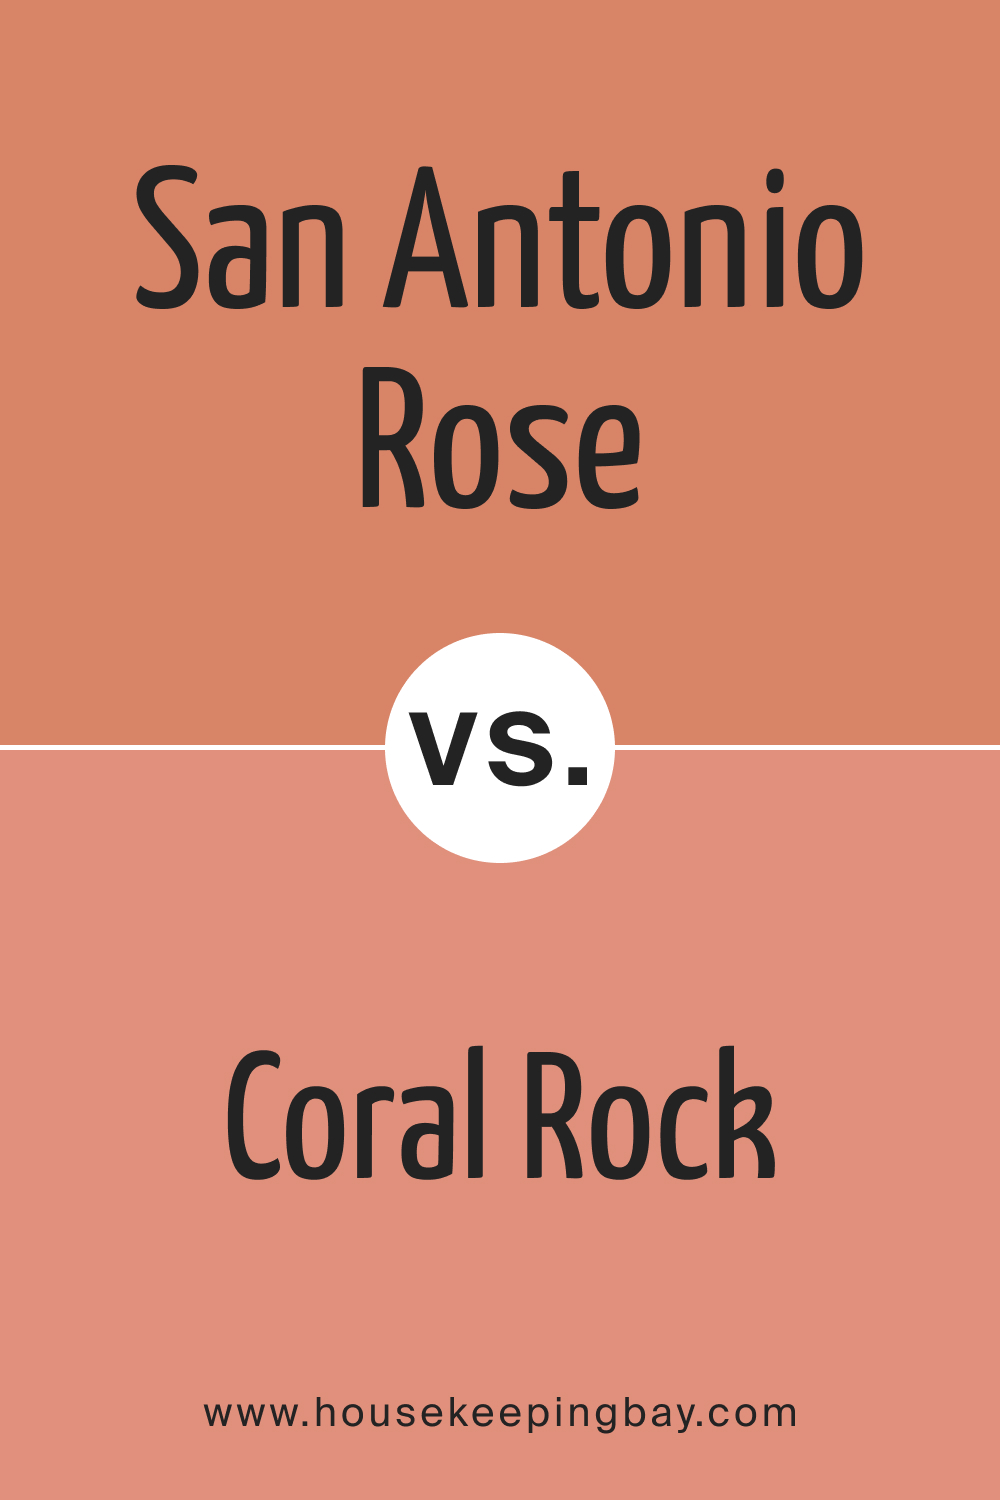 San Antonio Rose 027 vs. BM 032 Coral Rock